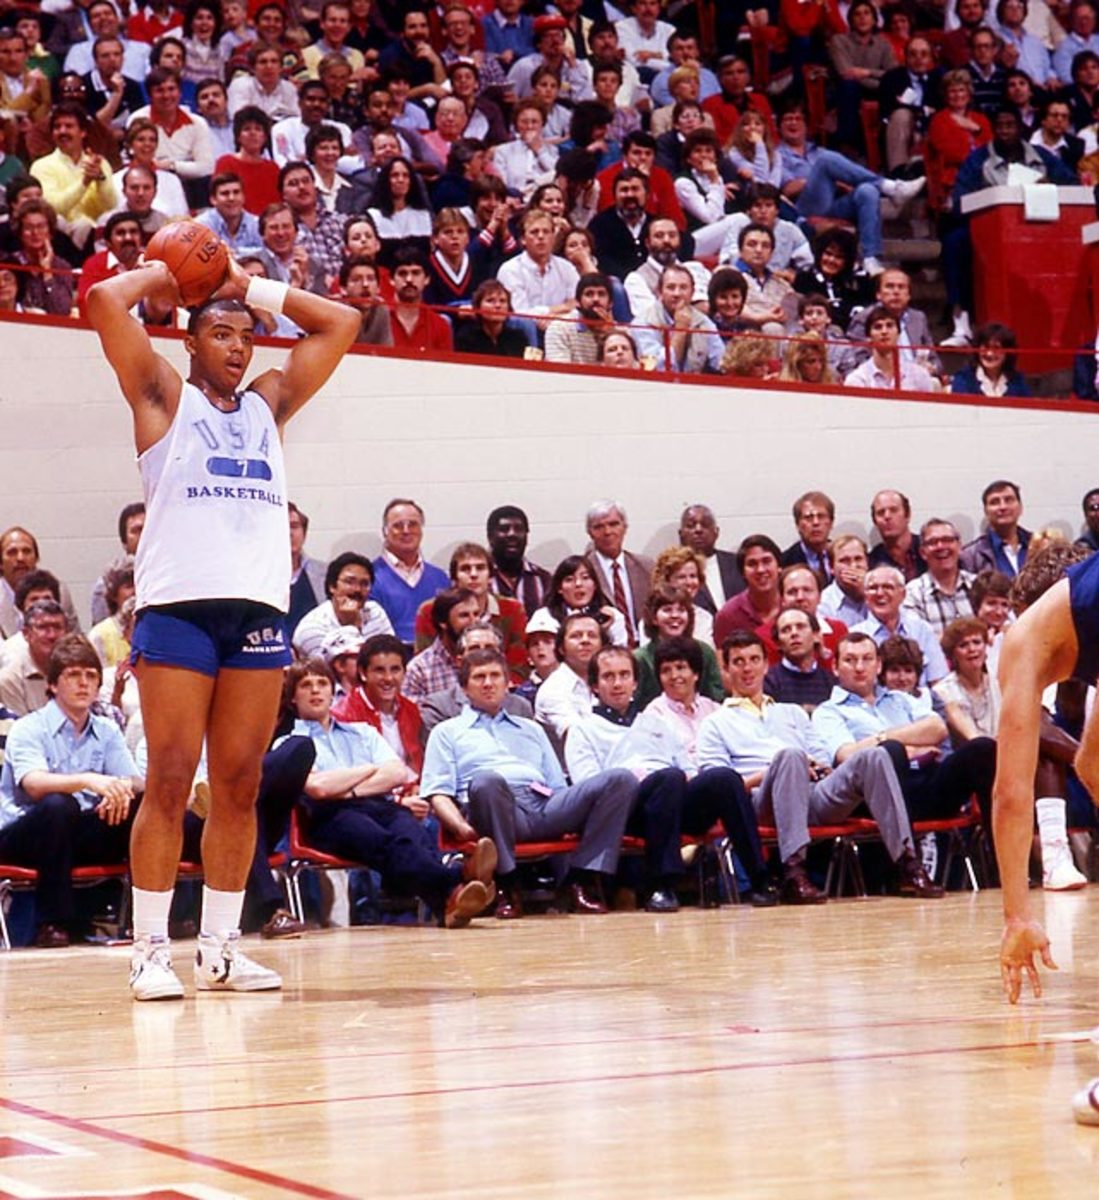 140430121416-1984-olympic-basketball-dotcom136-single-image-cut.jpg